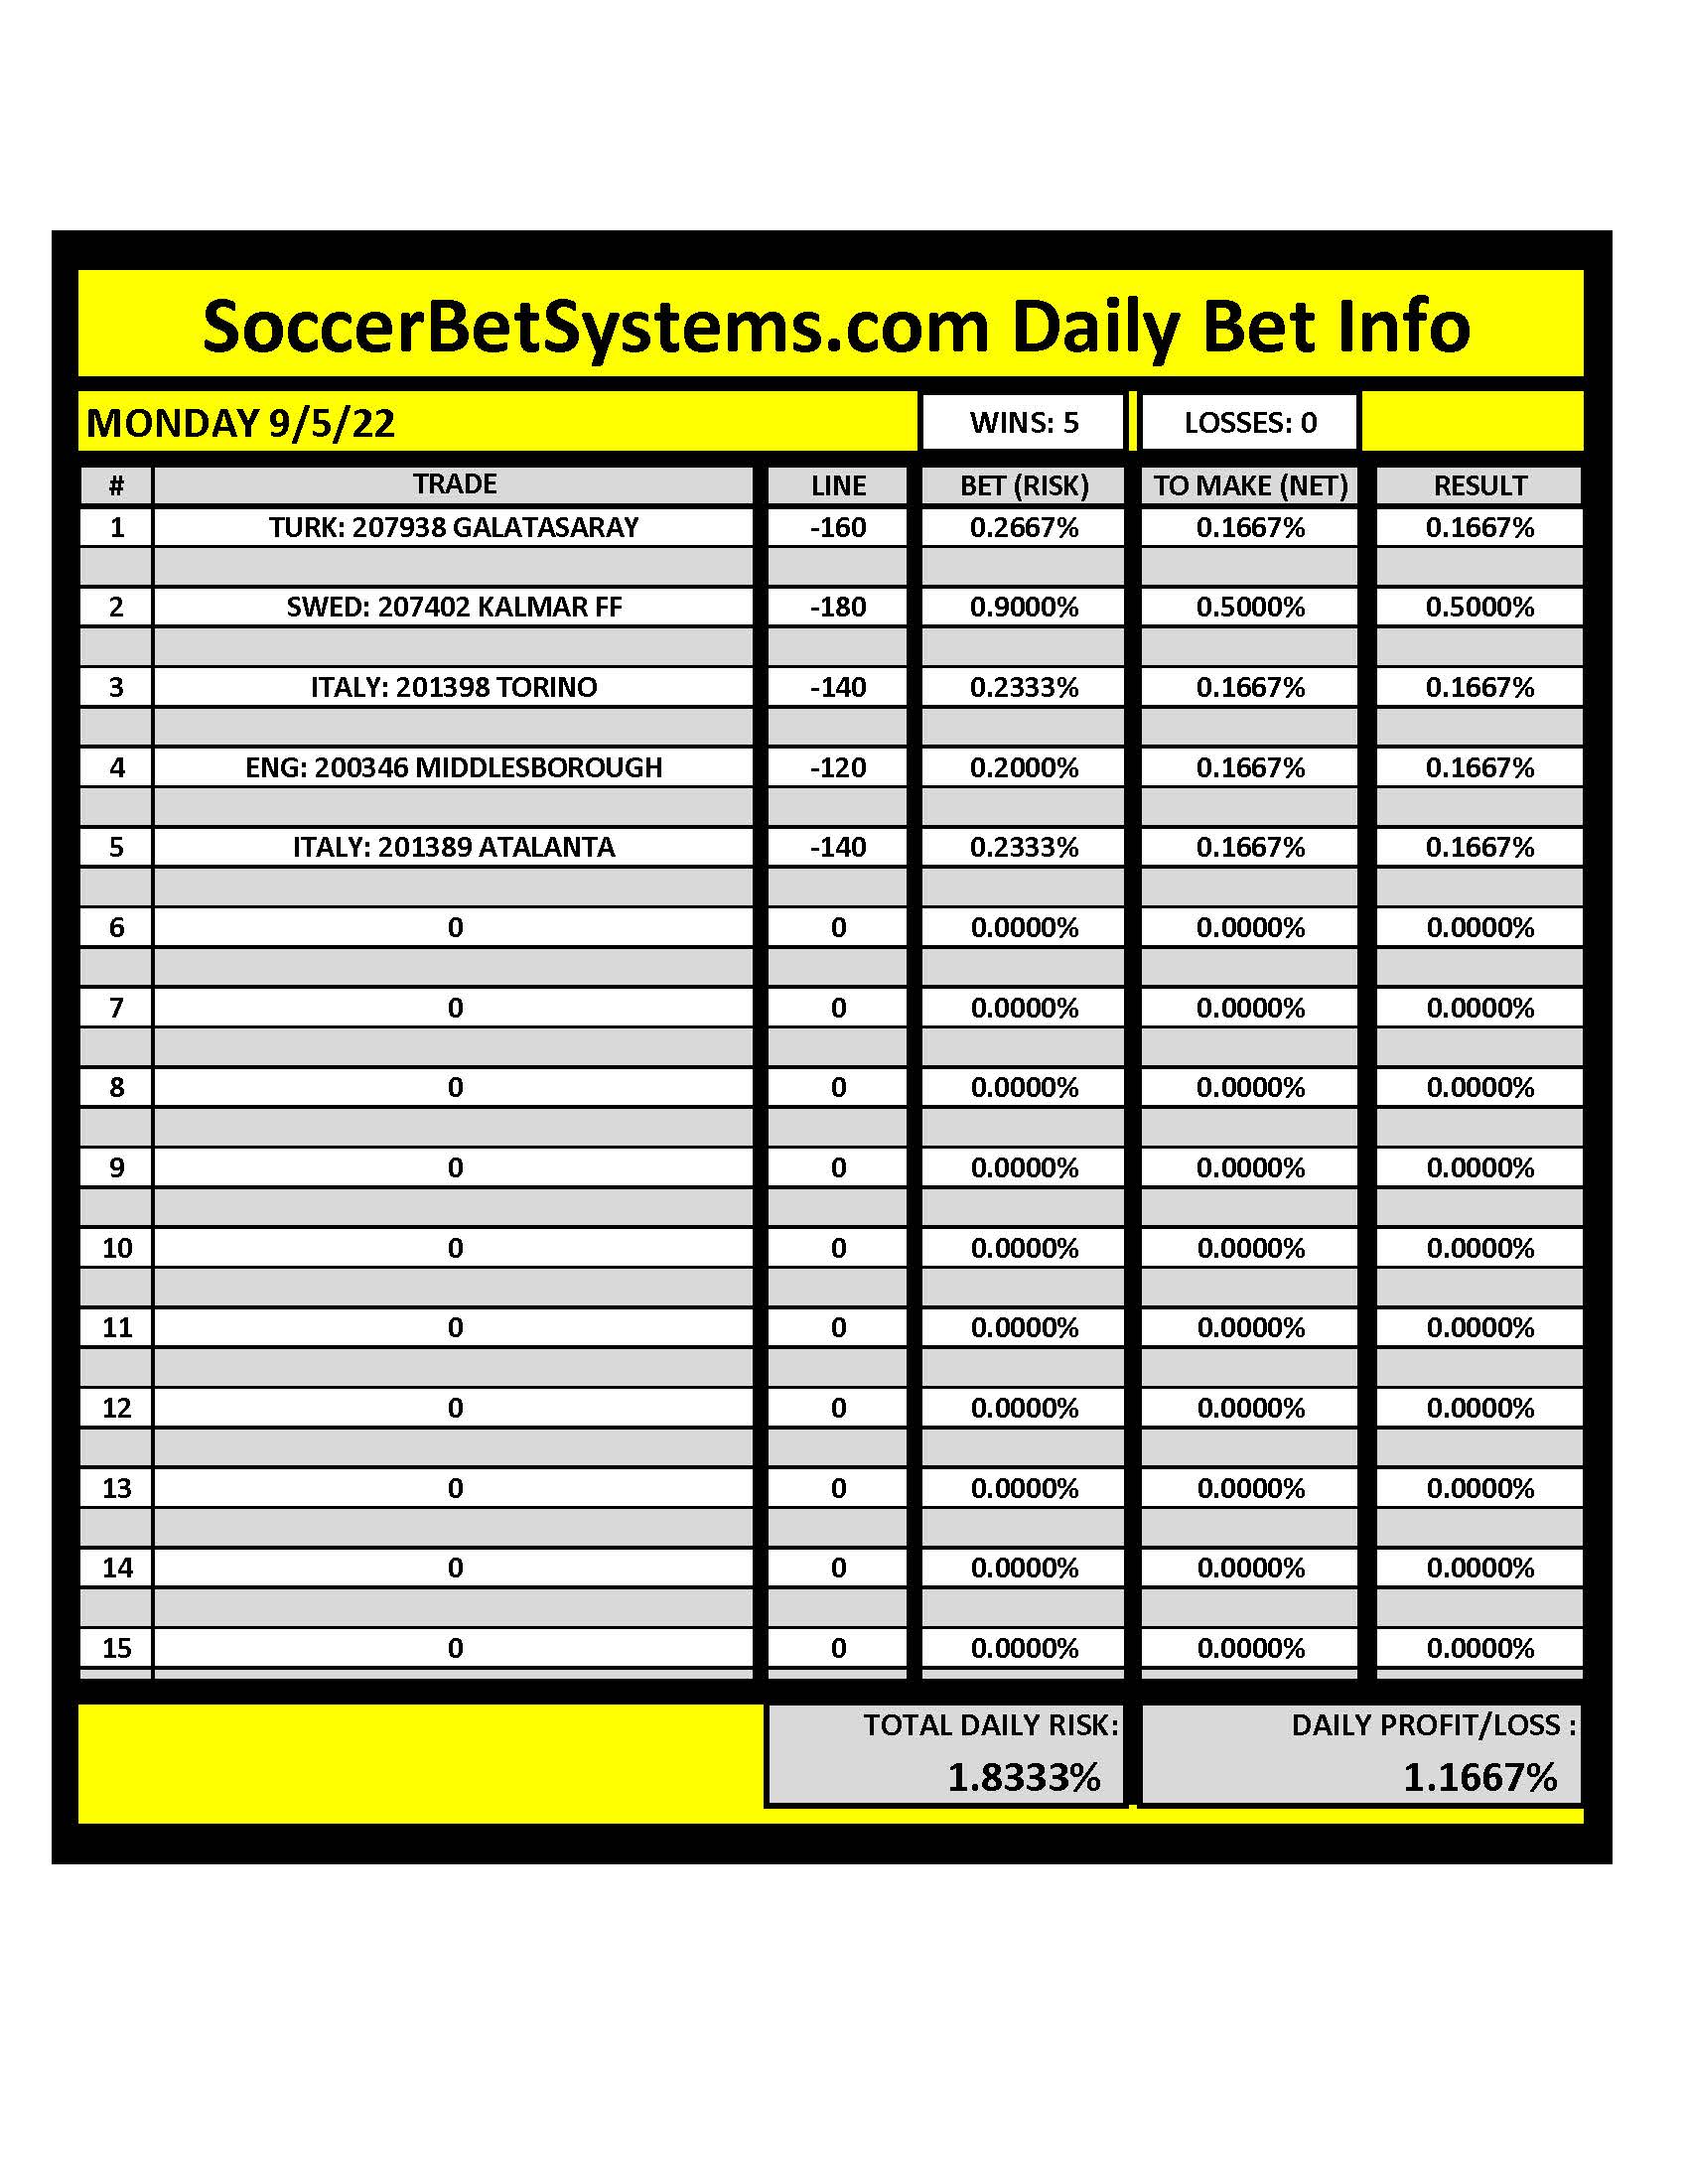 SoccerBetSystems.com 9/5/22 Daily Results